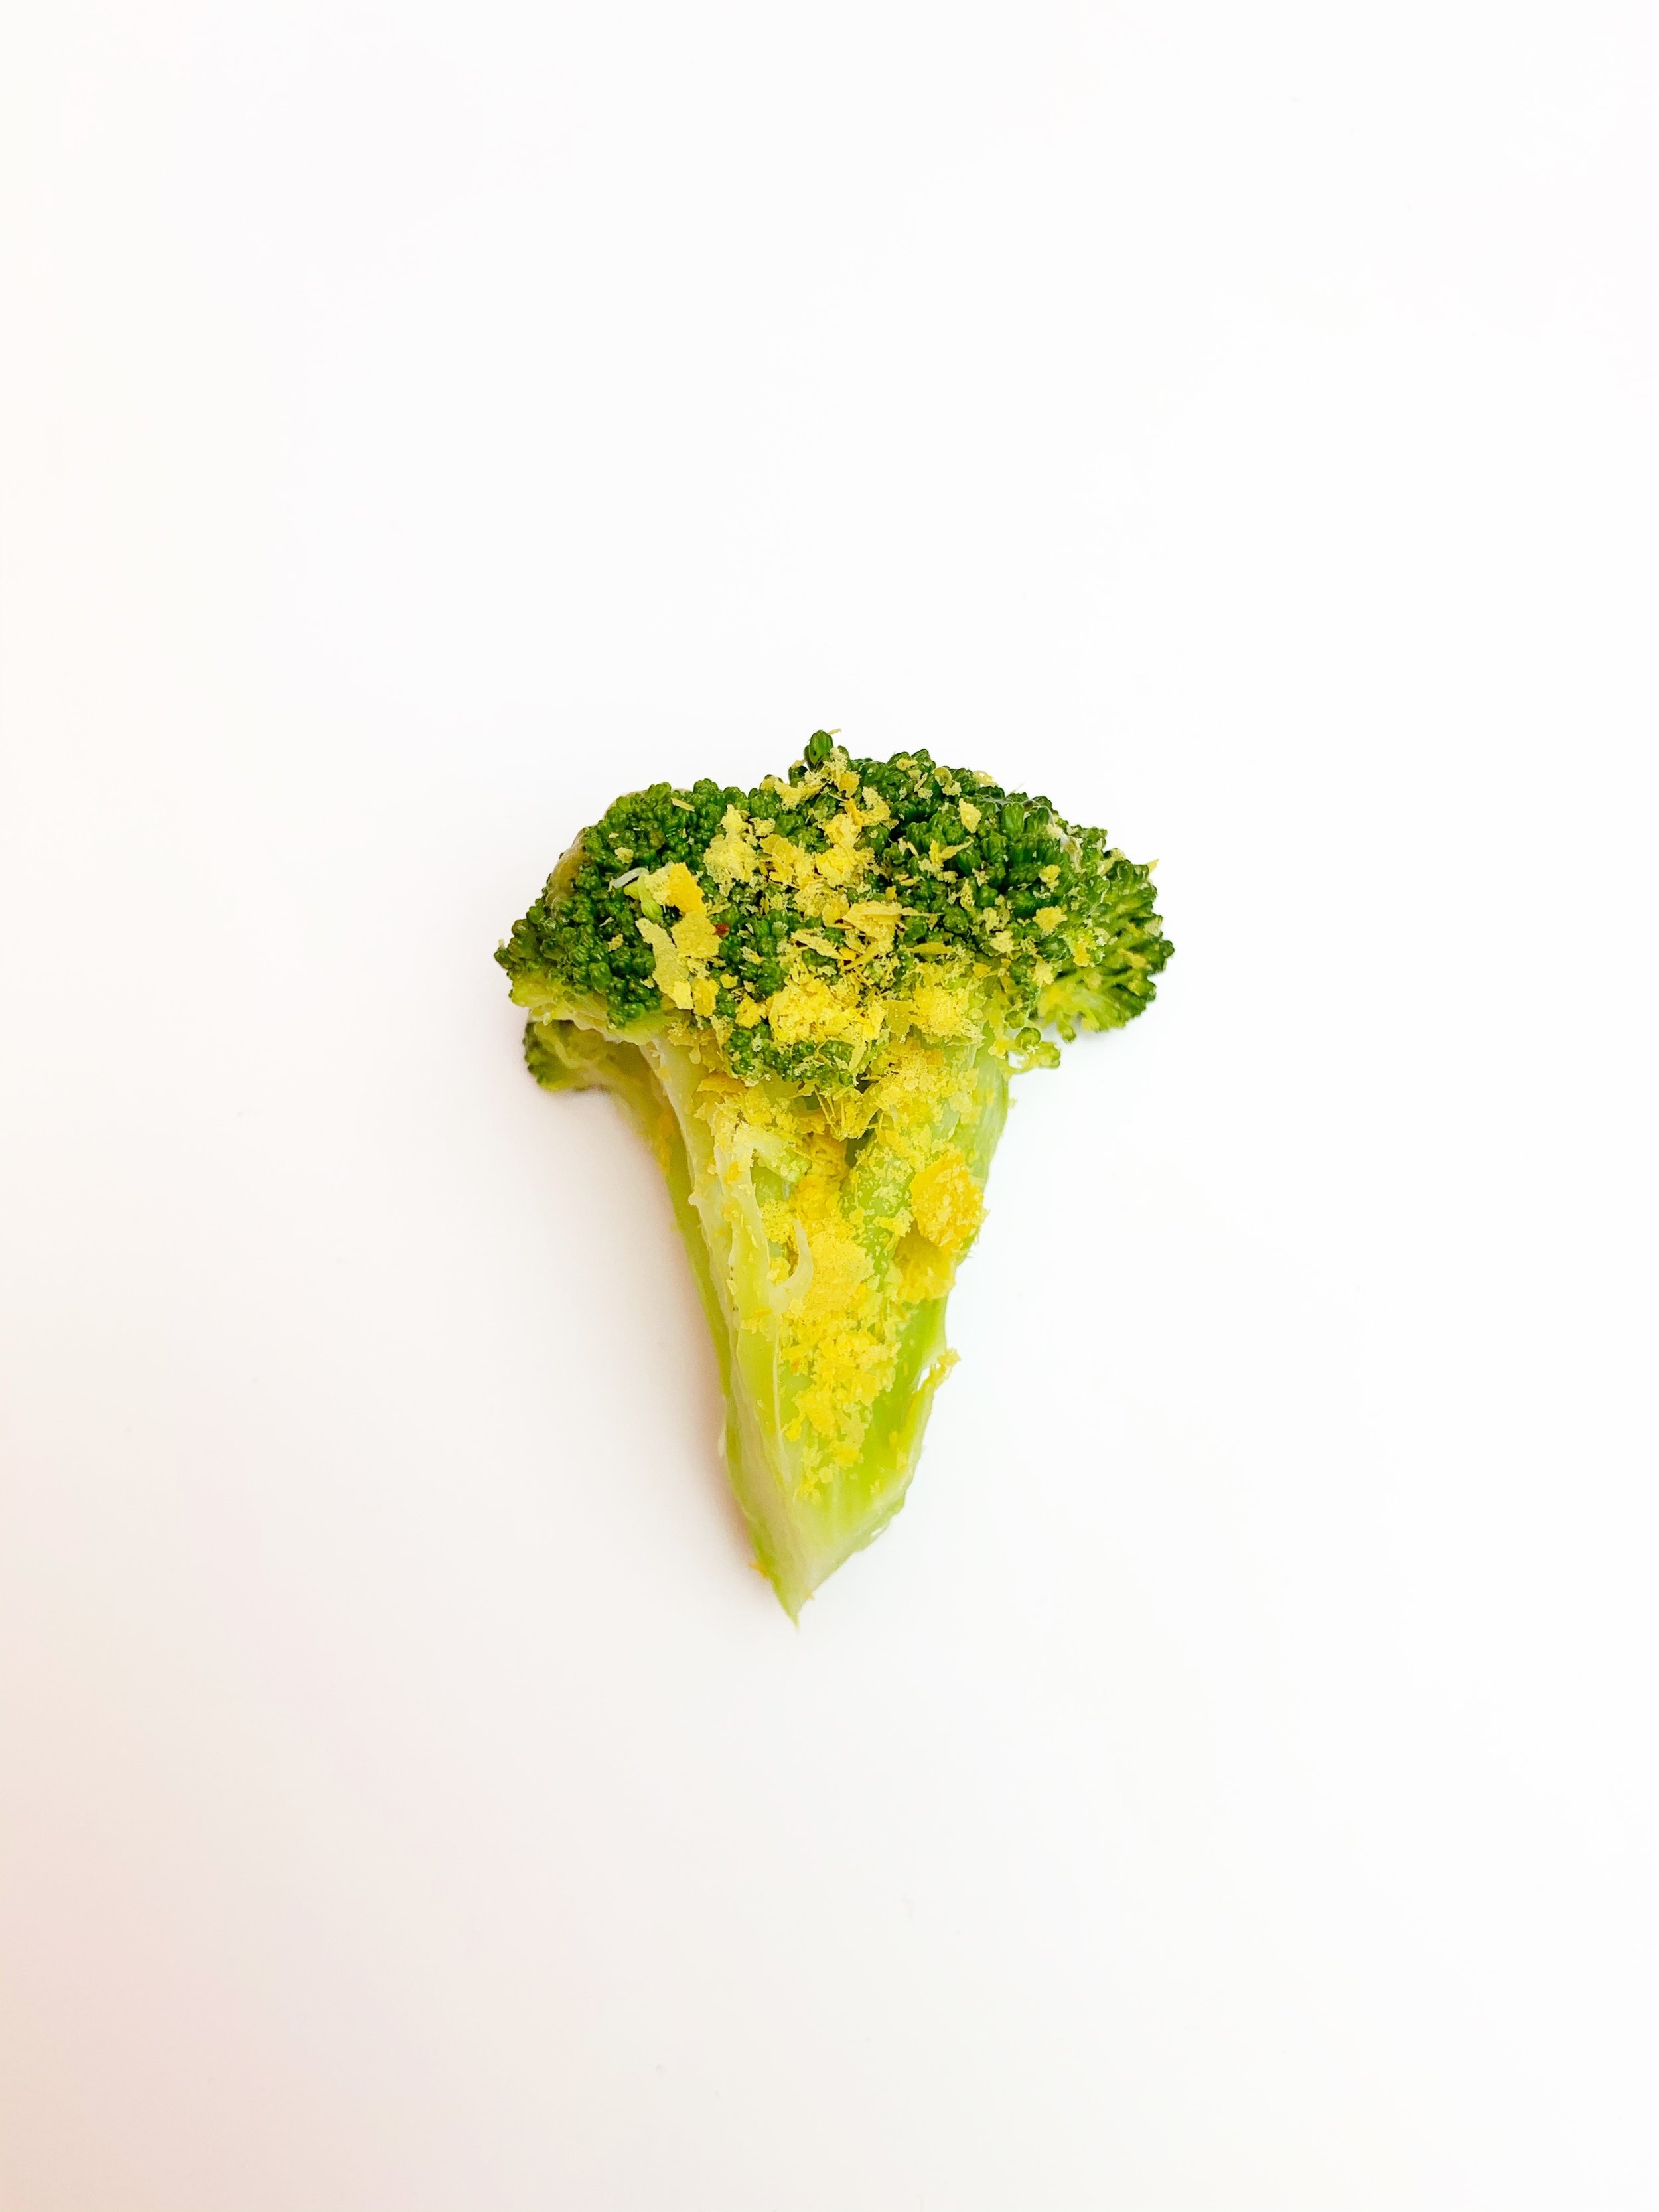 Broccoli with Nutritional Yeast.jpg